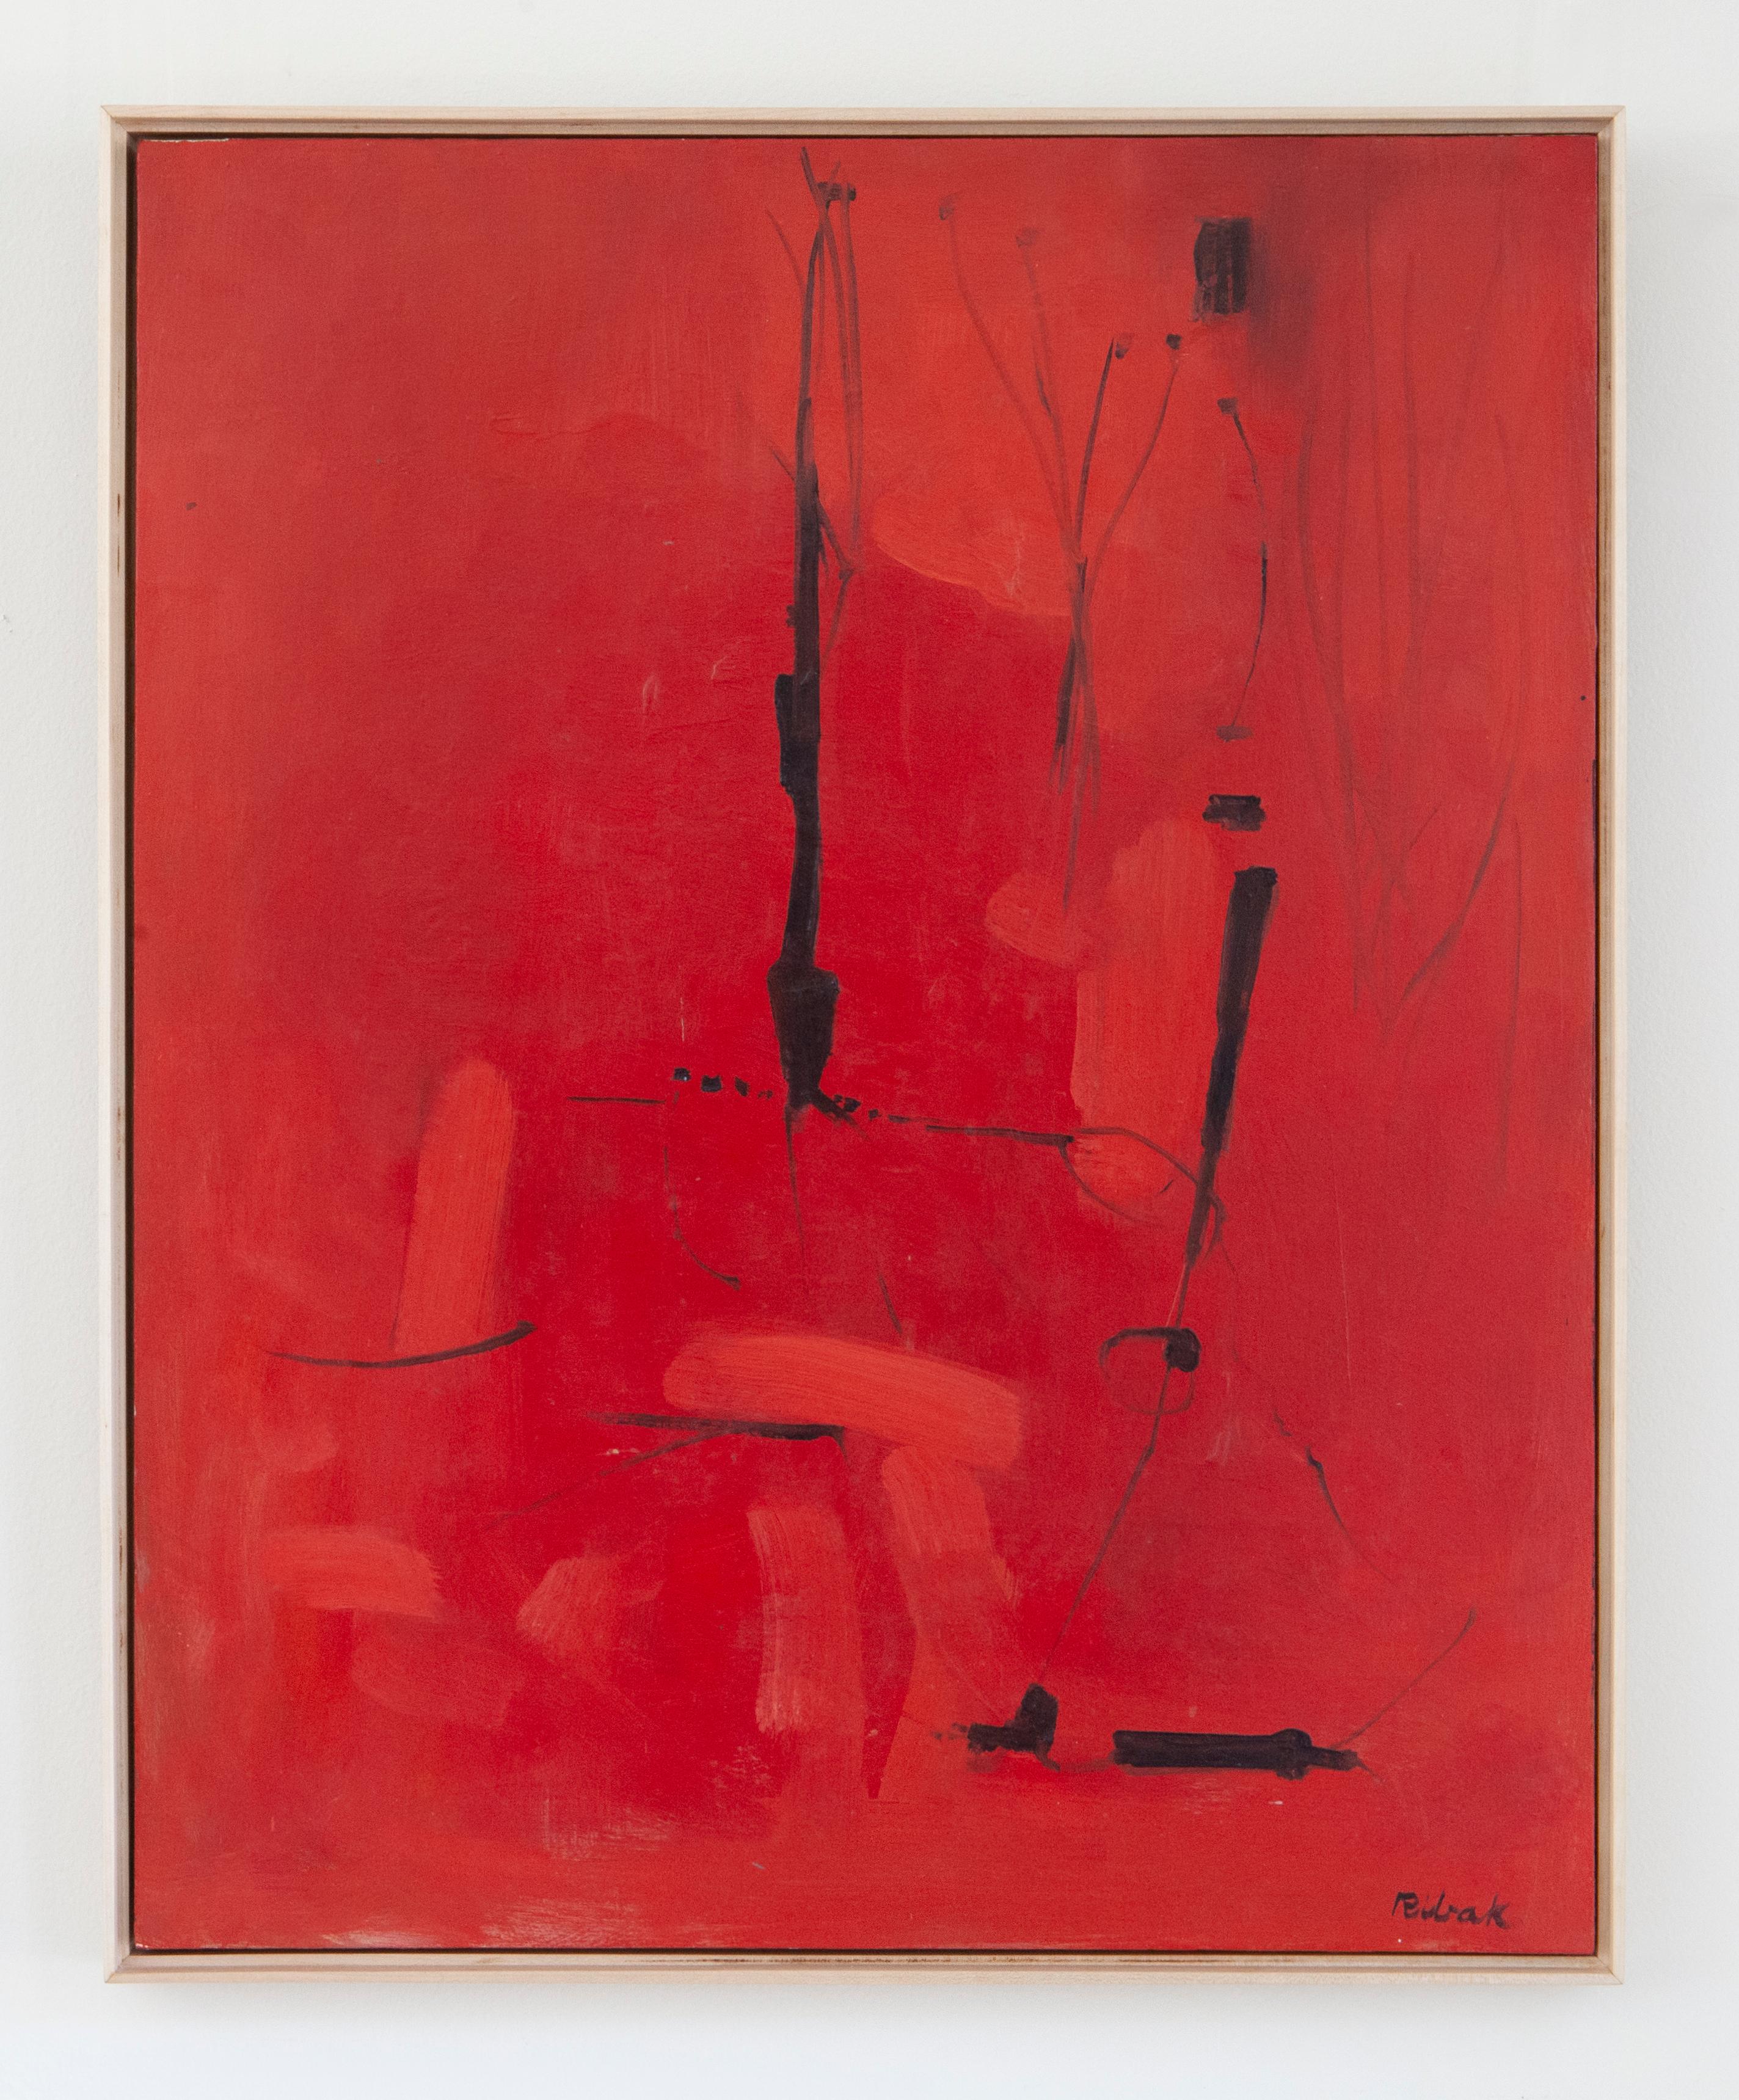 Louis Ribak Abstract Painting - Burning Woods